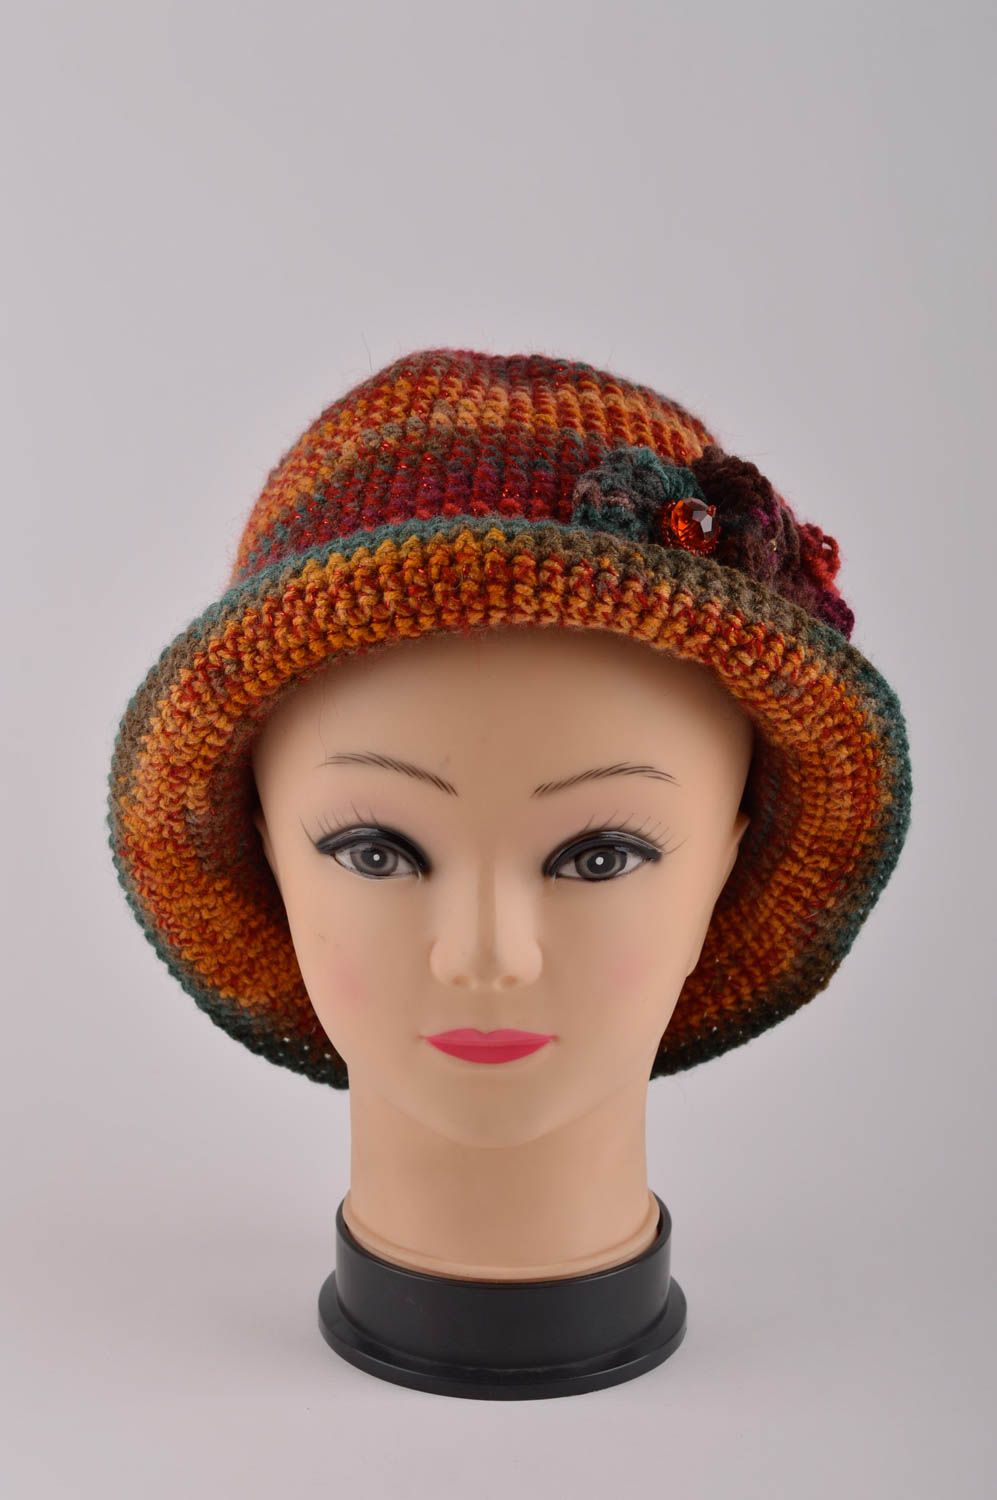 Handmade crochet hat fashion accessories ladies hat best gifts for women photo 3